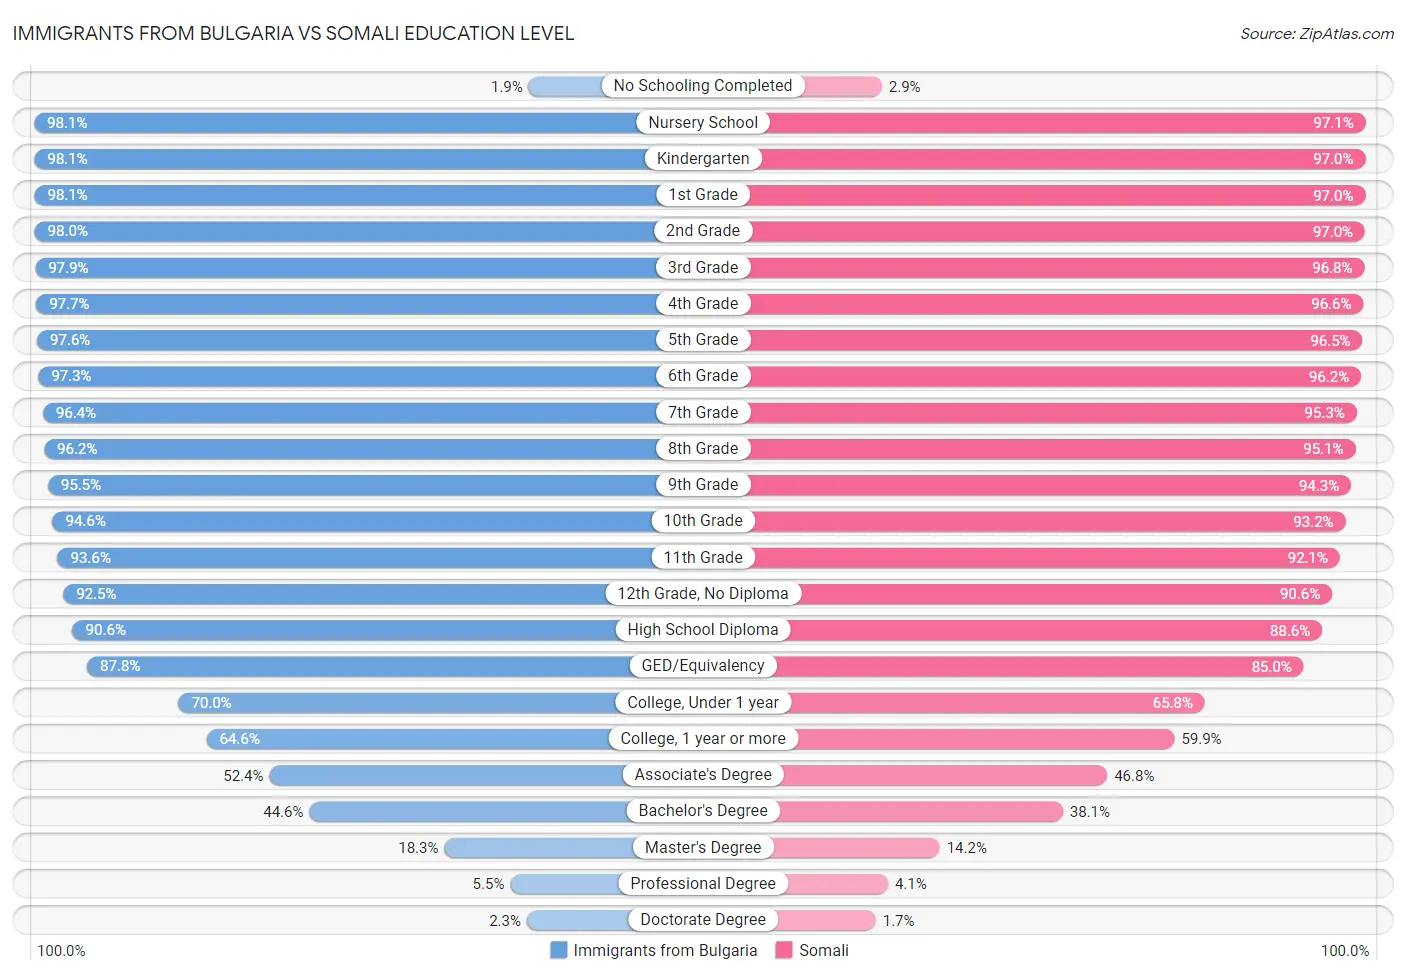 Immigrants from Bulgaria vs Somali Education Level